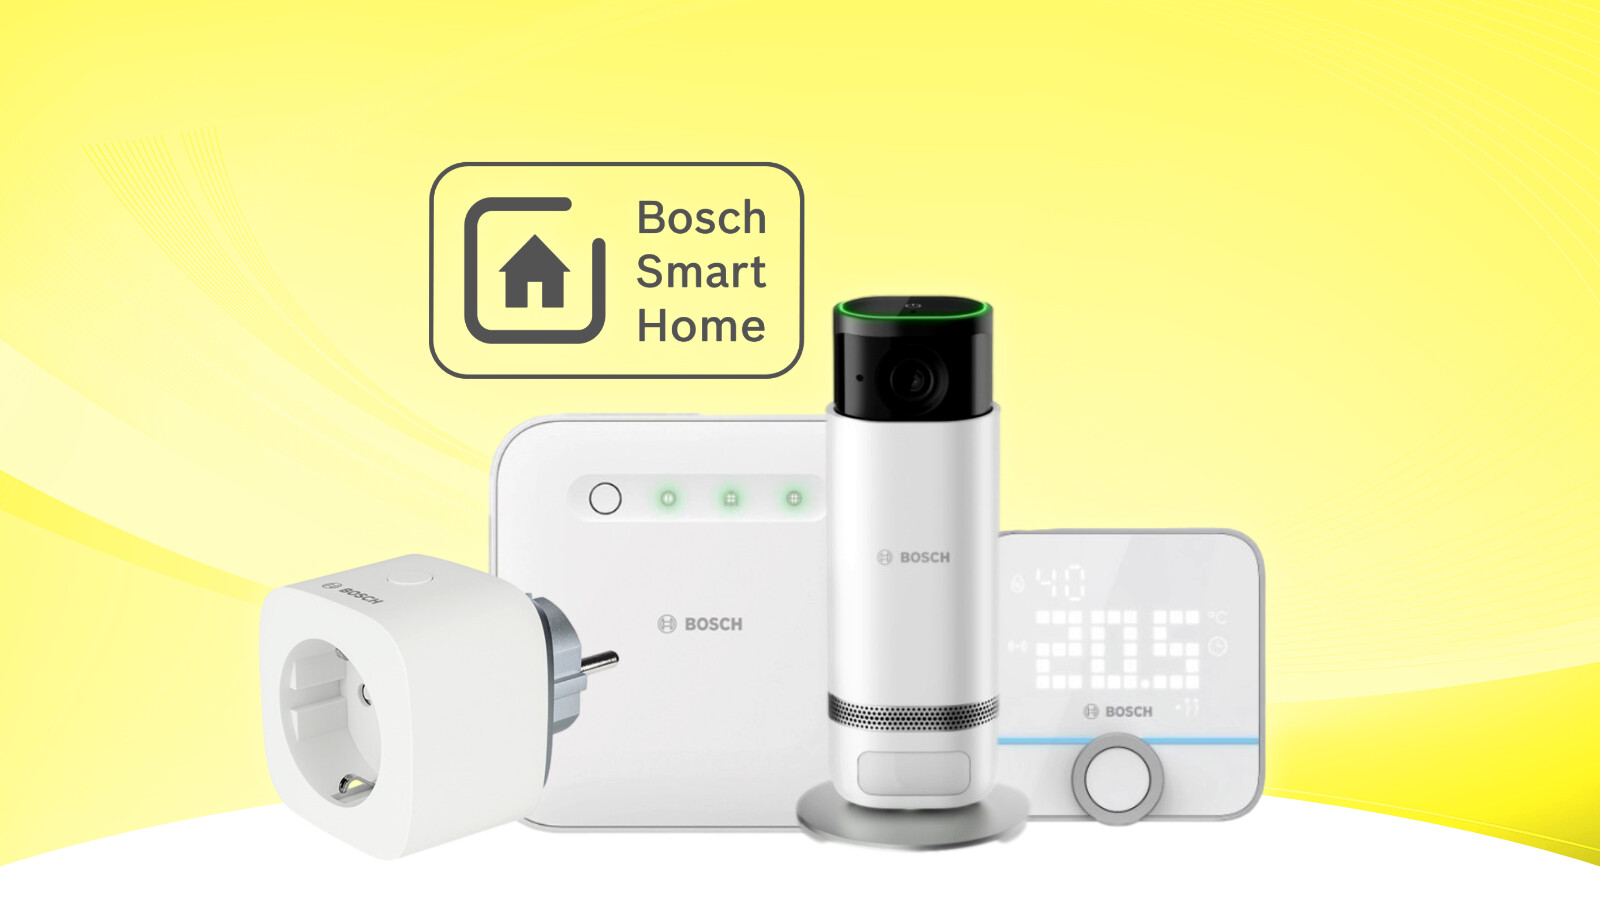 tink stellt vor: Der Bosch Smart Home Controller II